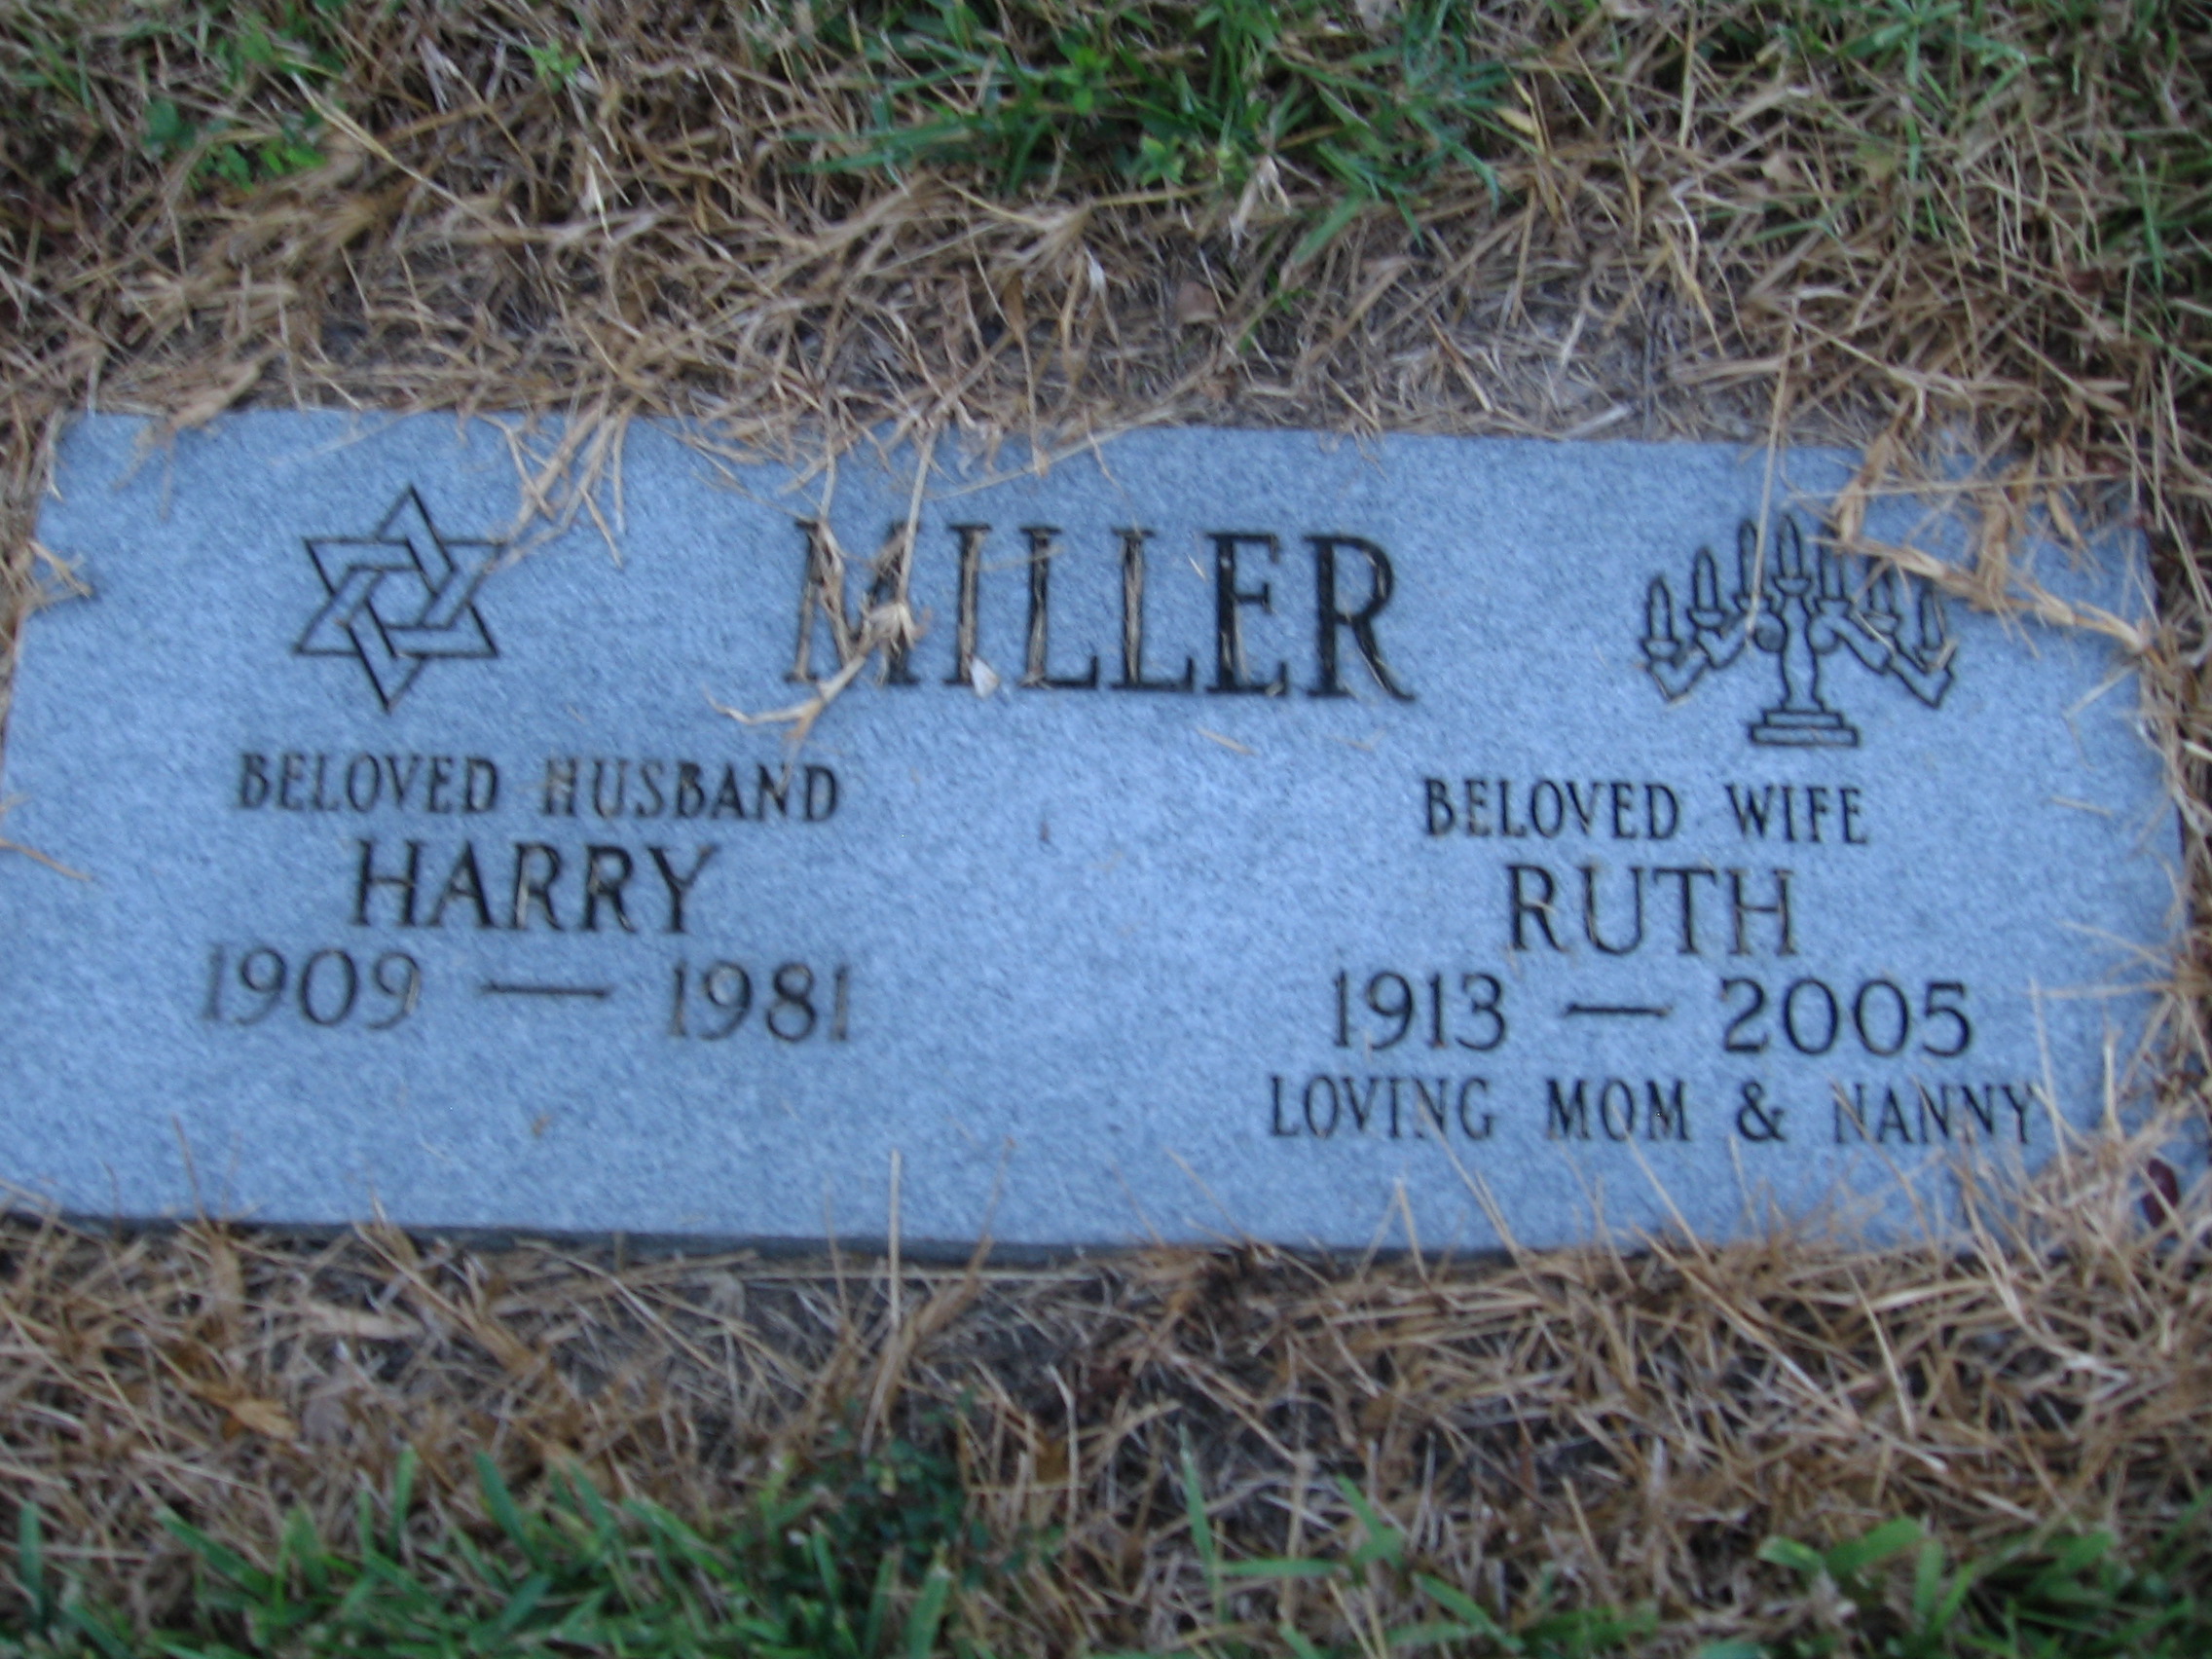 Harry Miller